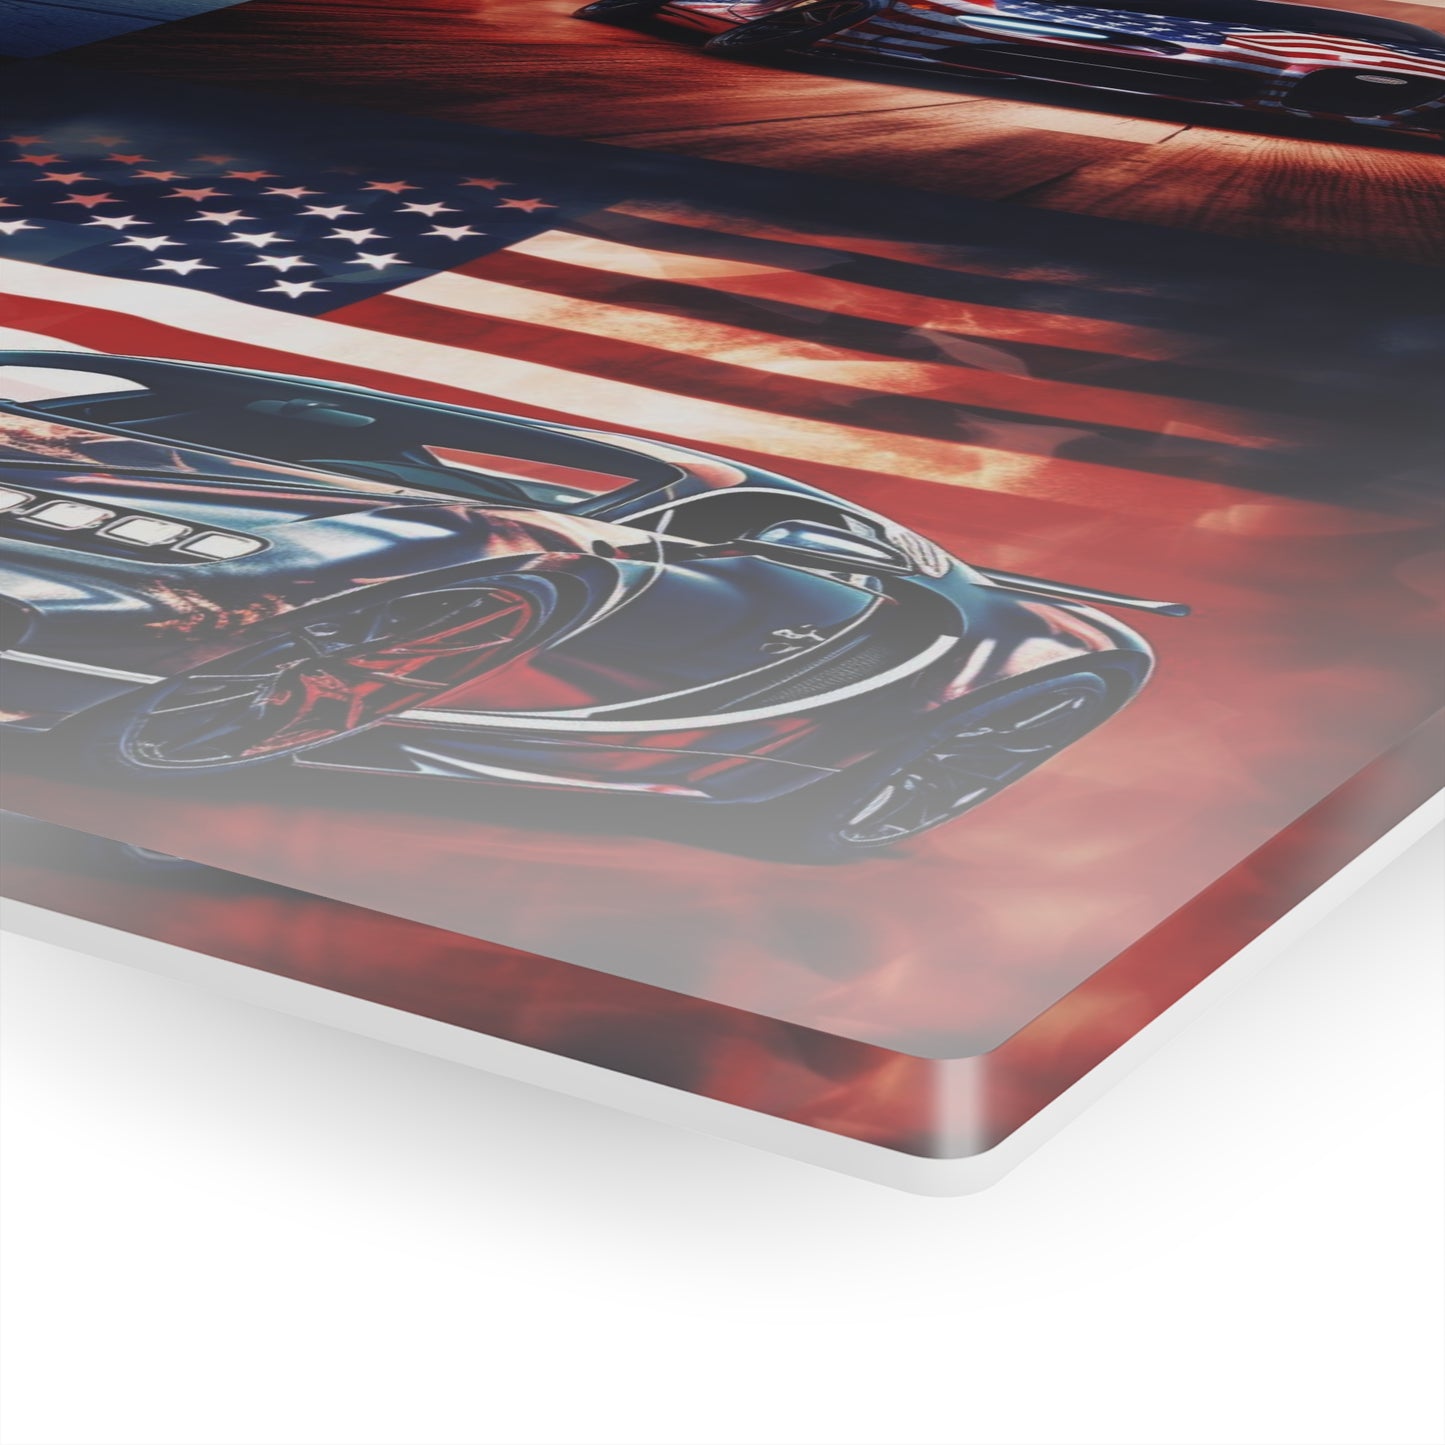 Acrylic Prints Abstract American Flag Background Bugatti 5